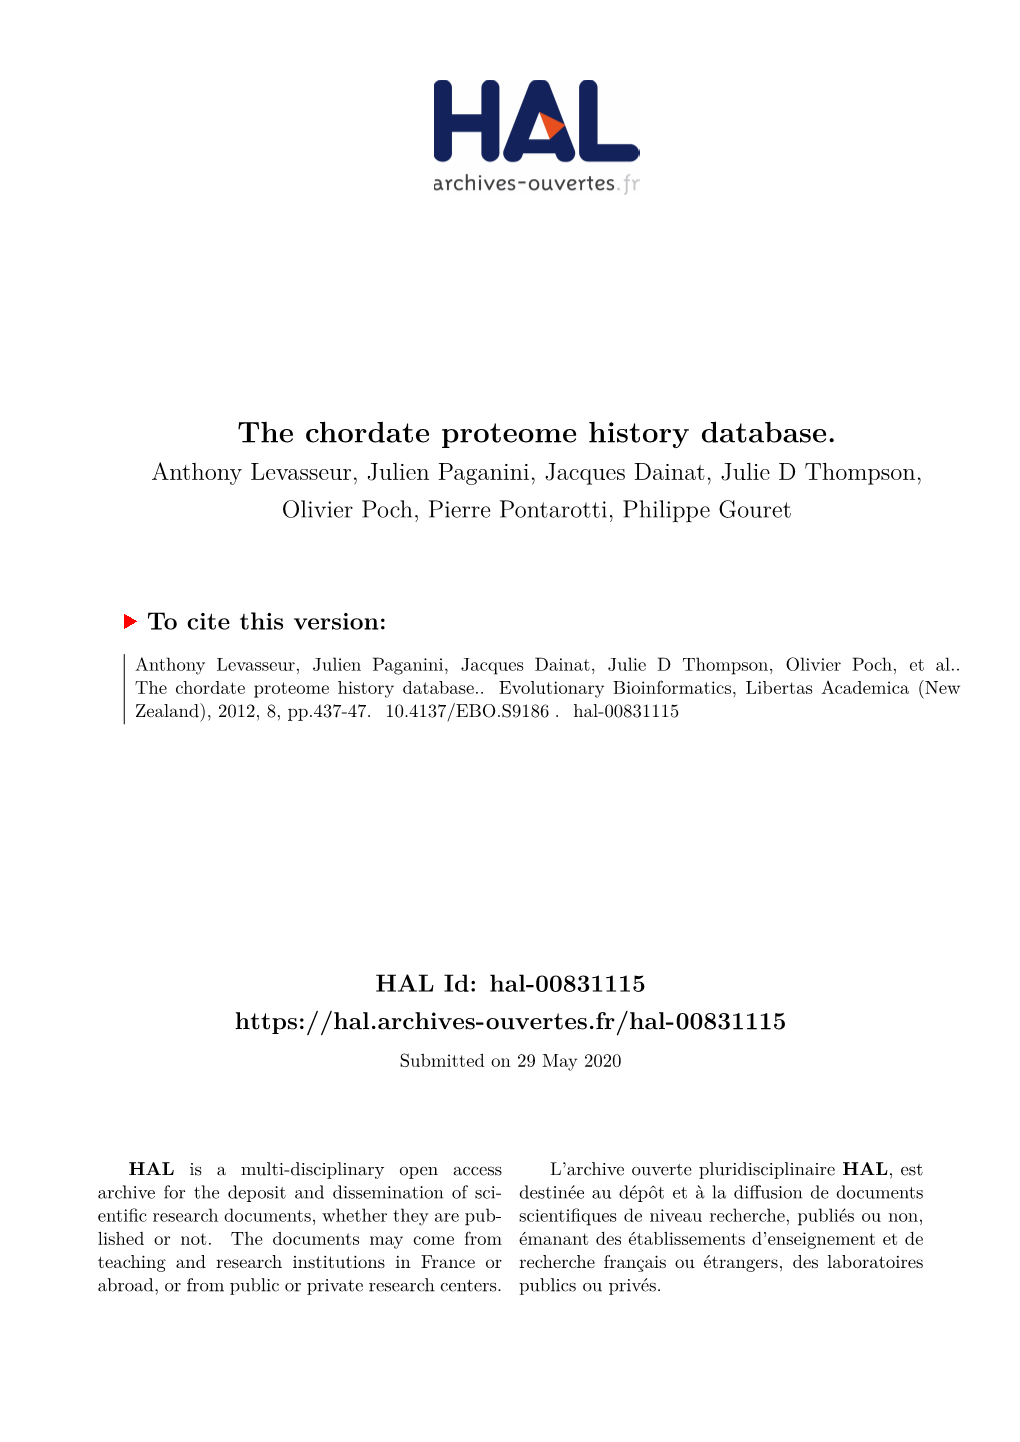 The Chordate Proteome History Database. Anthony Levasseur, Julien Paganini, Jacques Dainat, Julie D Thompson, Olivier Poch, Pierre Pontarotti, Philippe Gouret